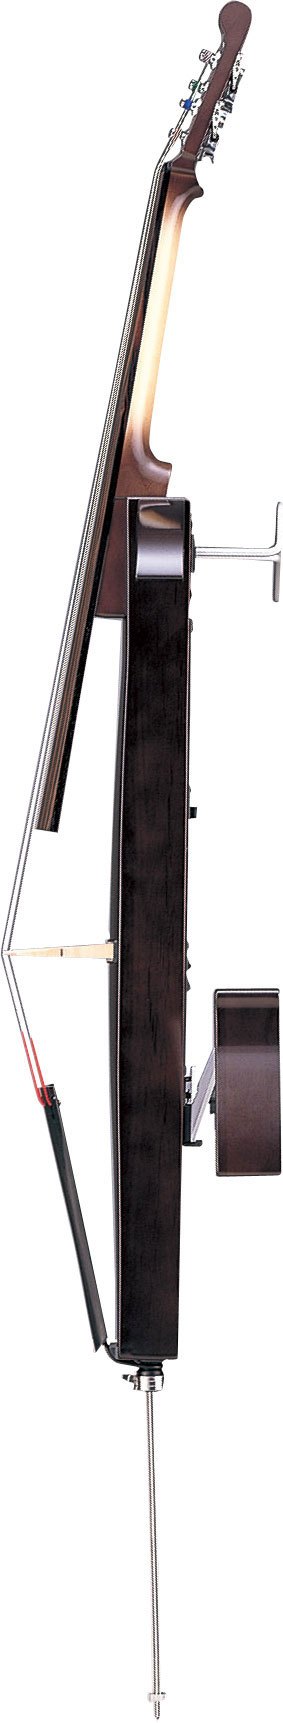 Yamaha Svc-50 Silent Cello - Violoncelo eléctrico - Variation 1